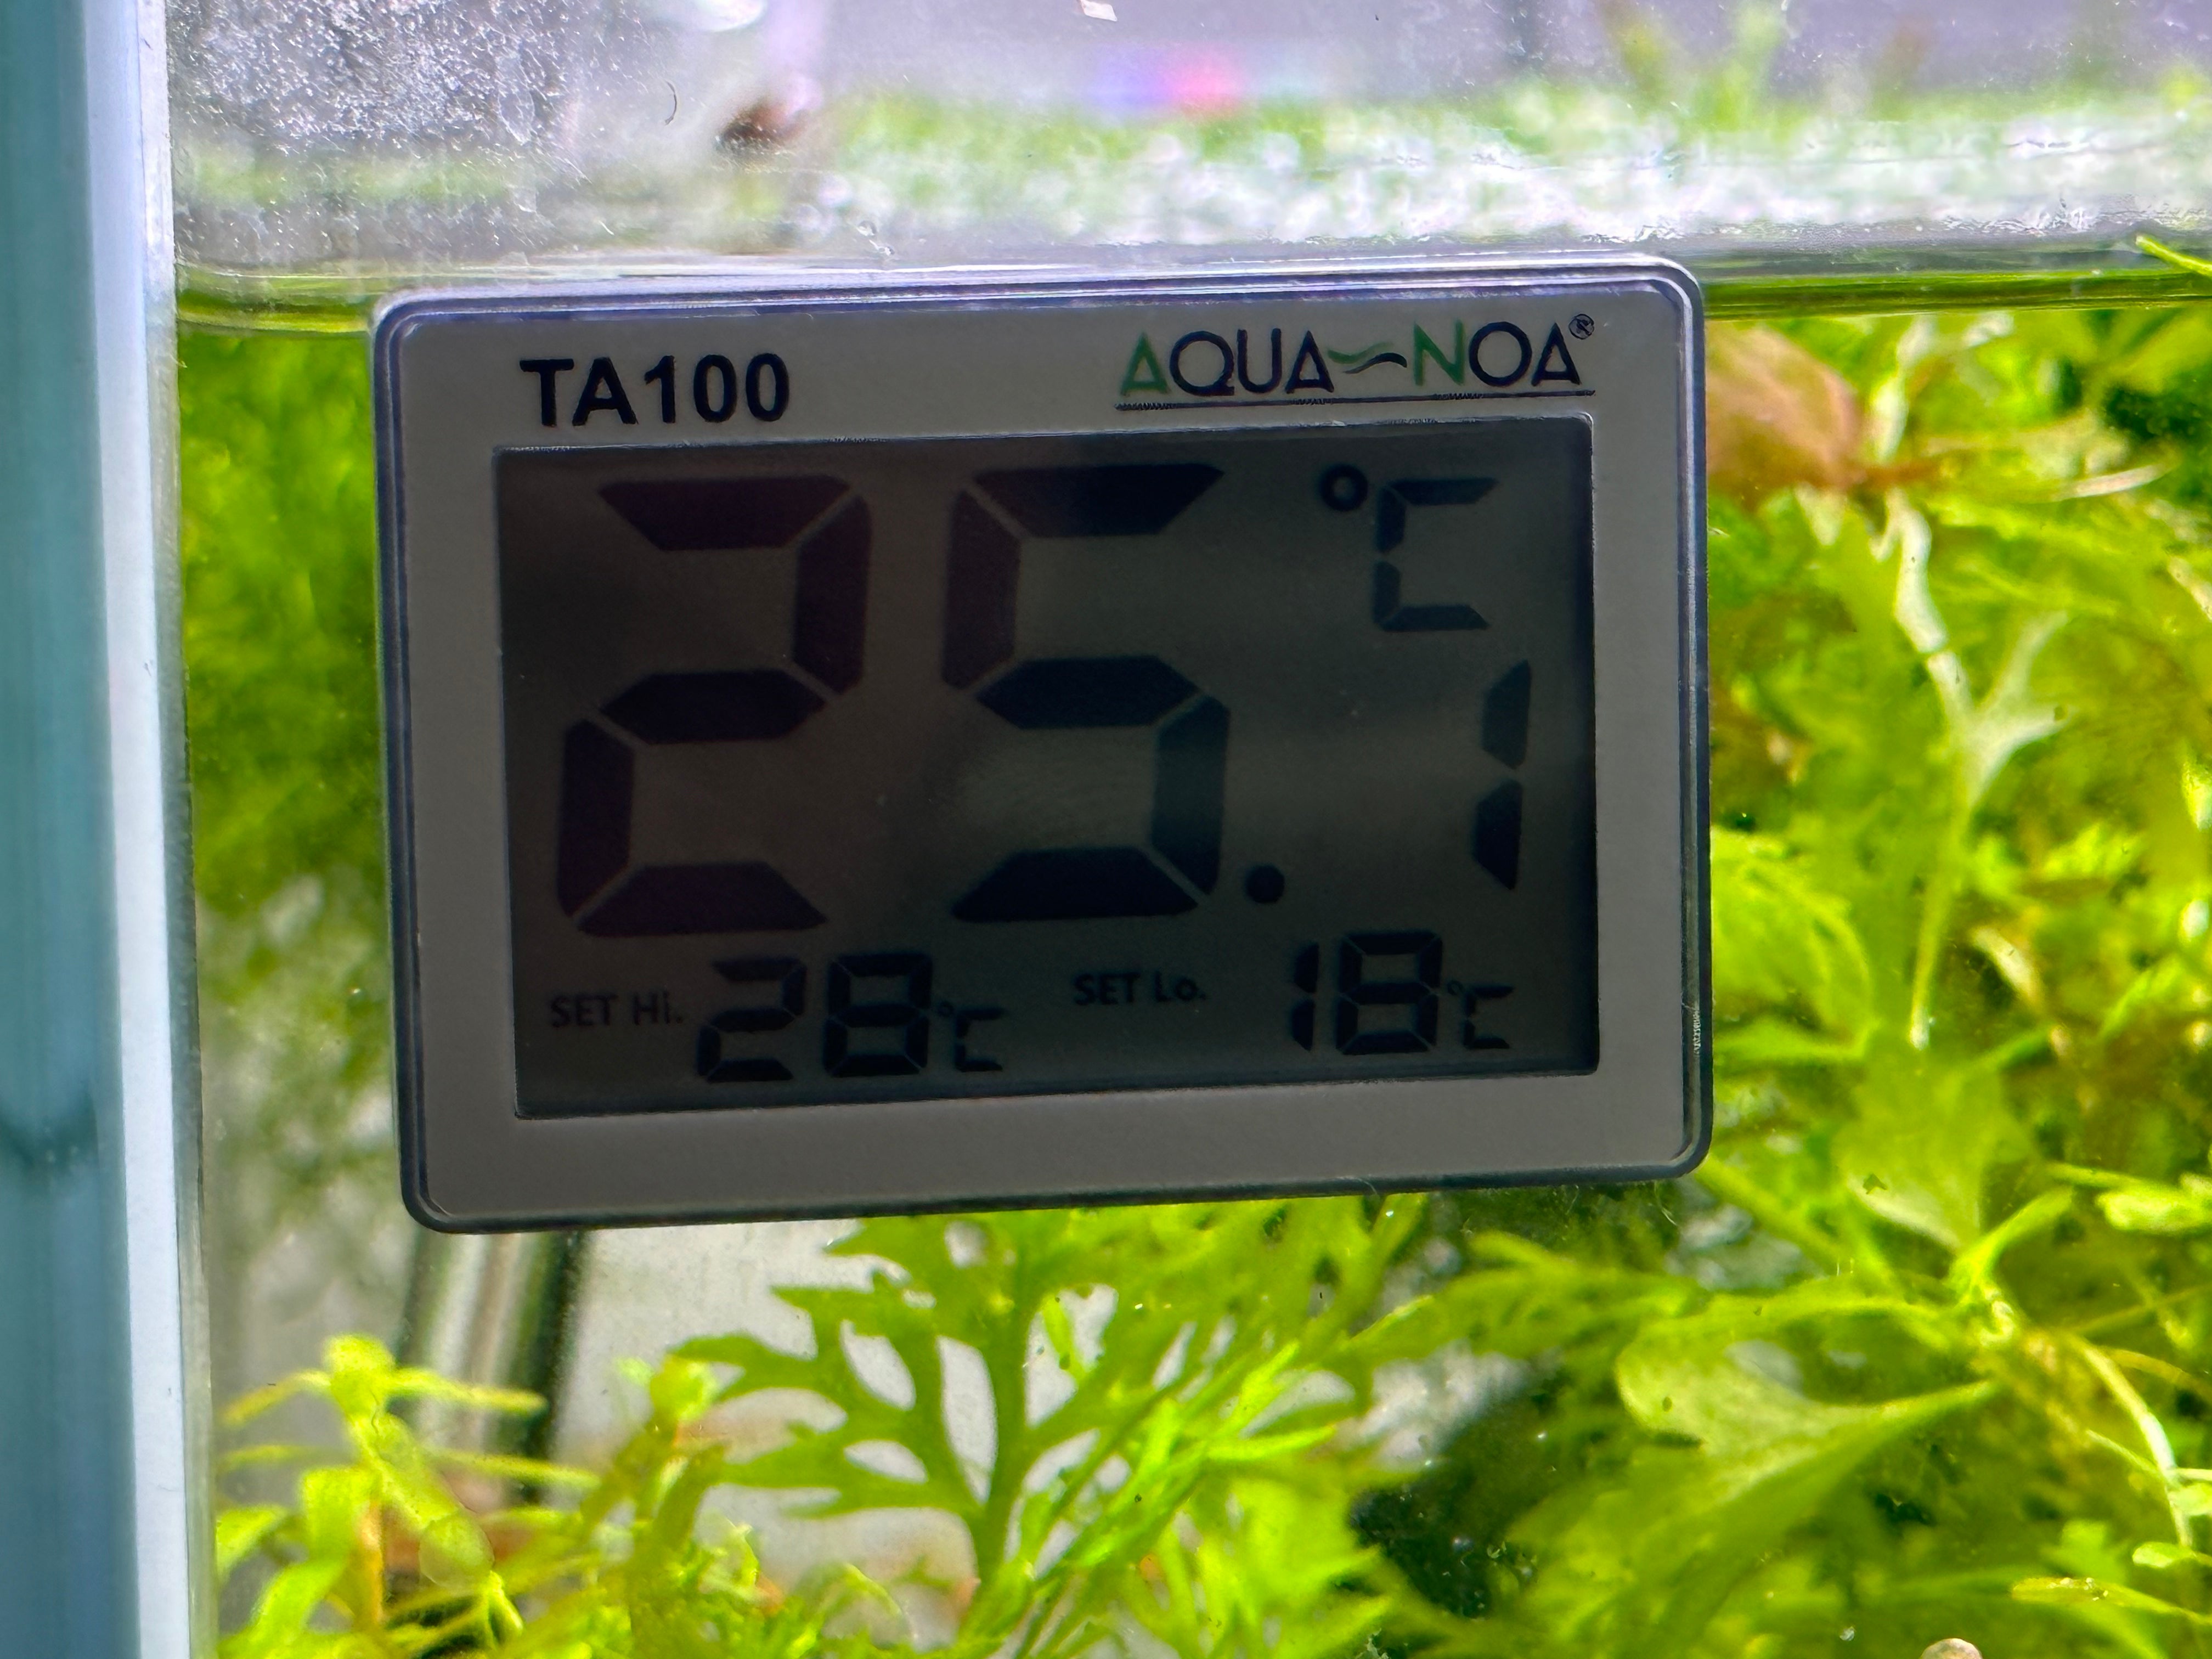 Aqua-Noa digitale externe thermometer